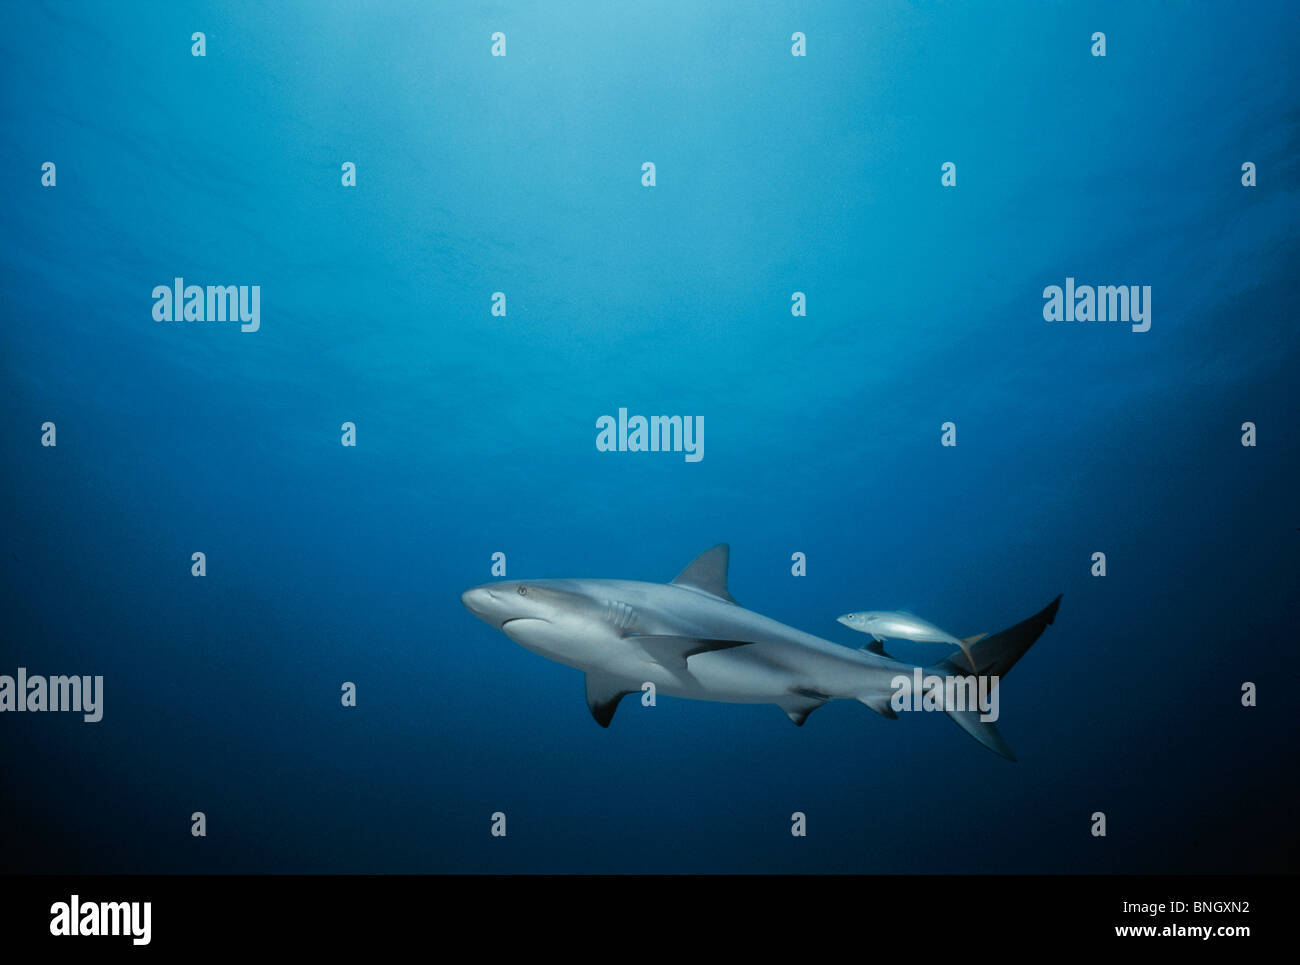 Karibischen Riffhai (Carcharhinus Perezi), Bahamas - Karibik. Stockfoto